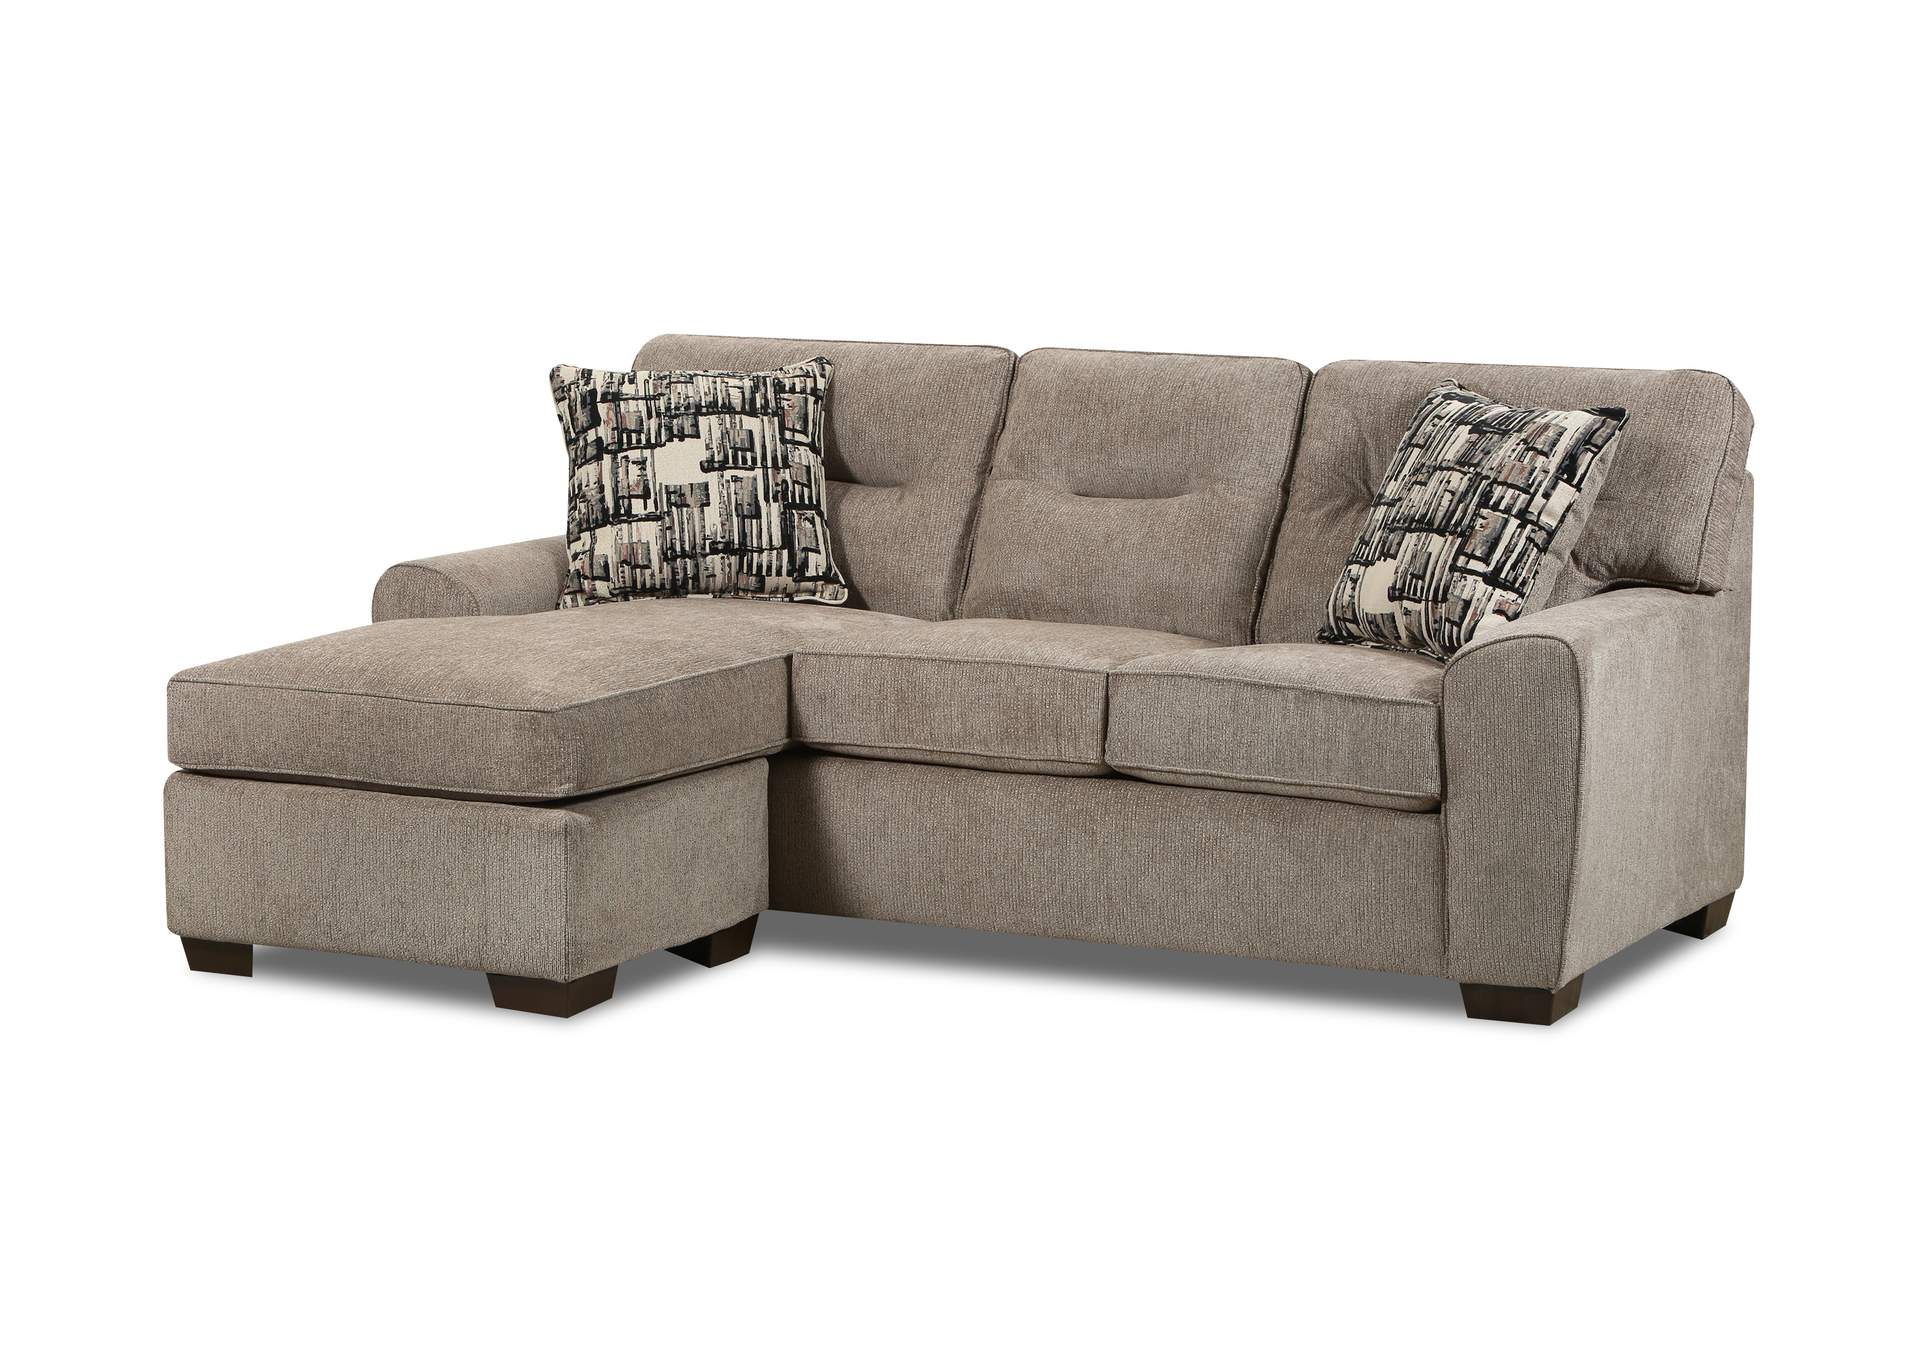 Sofa/Chaise - Driscoll Cappuccino / Cubism Spark,Lane Furniture